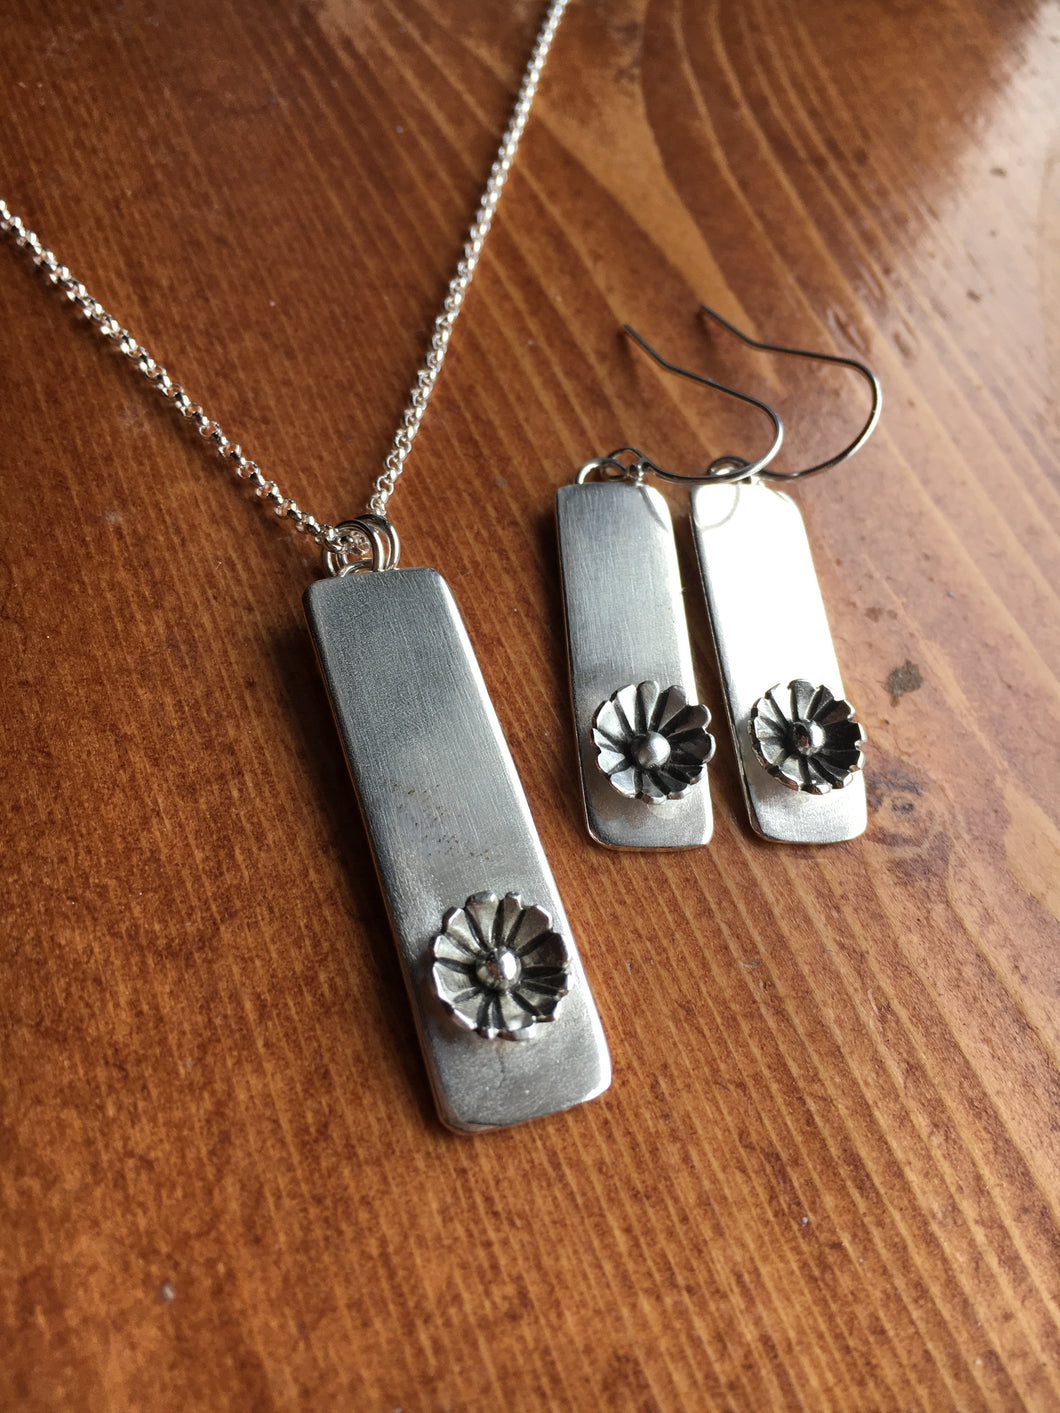 Simple handmade flower necklace/earring set